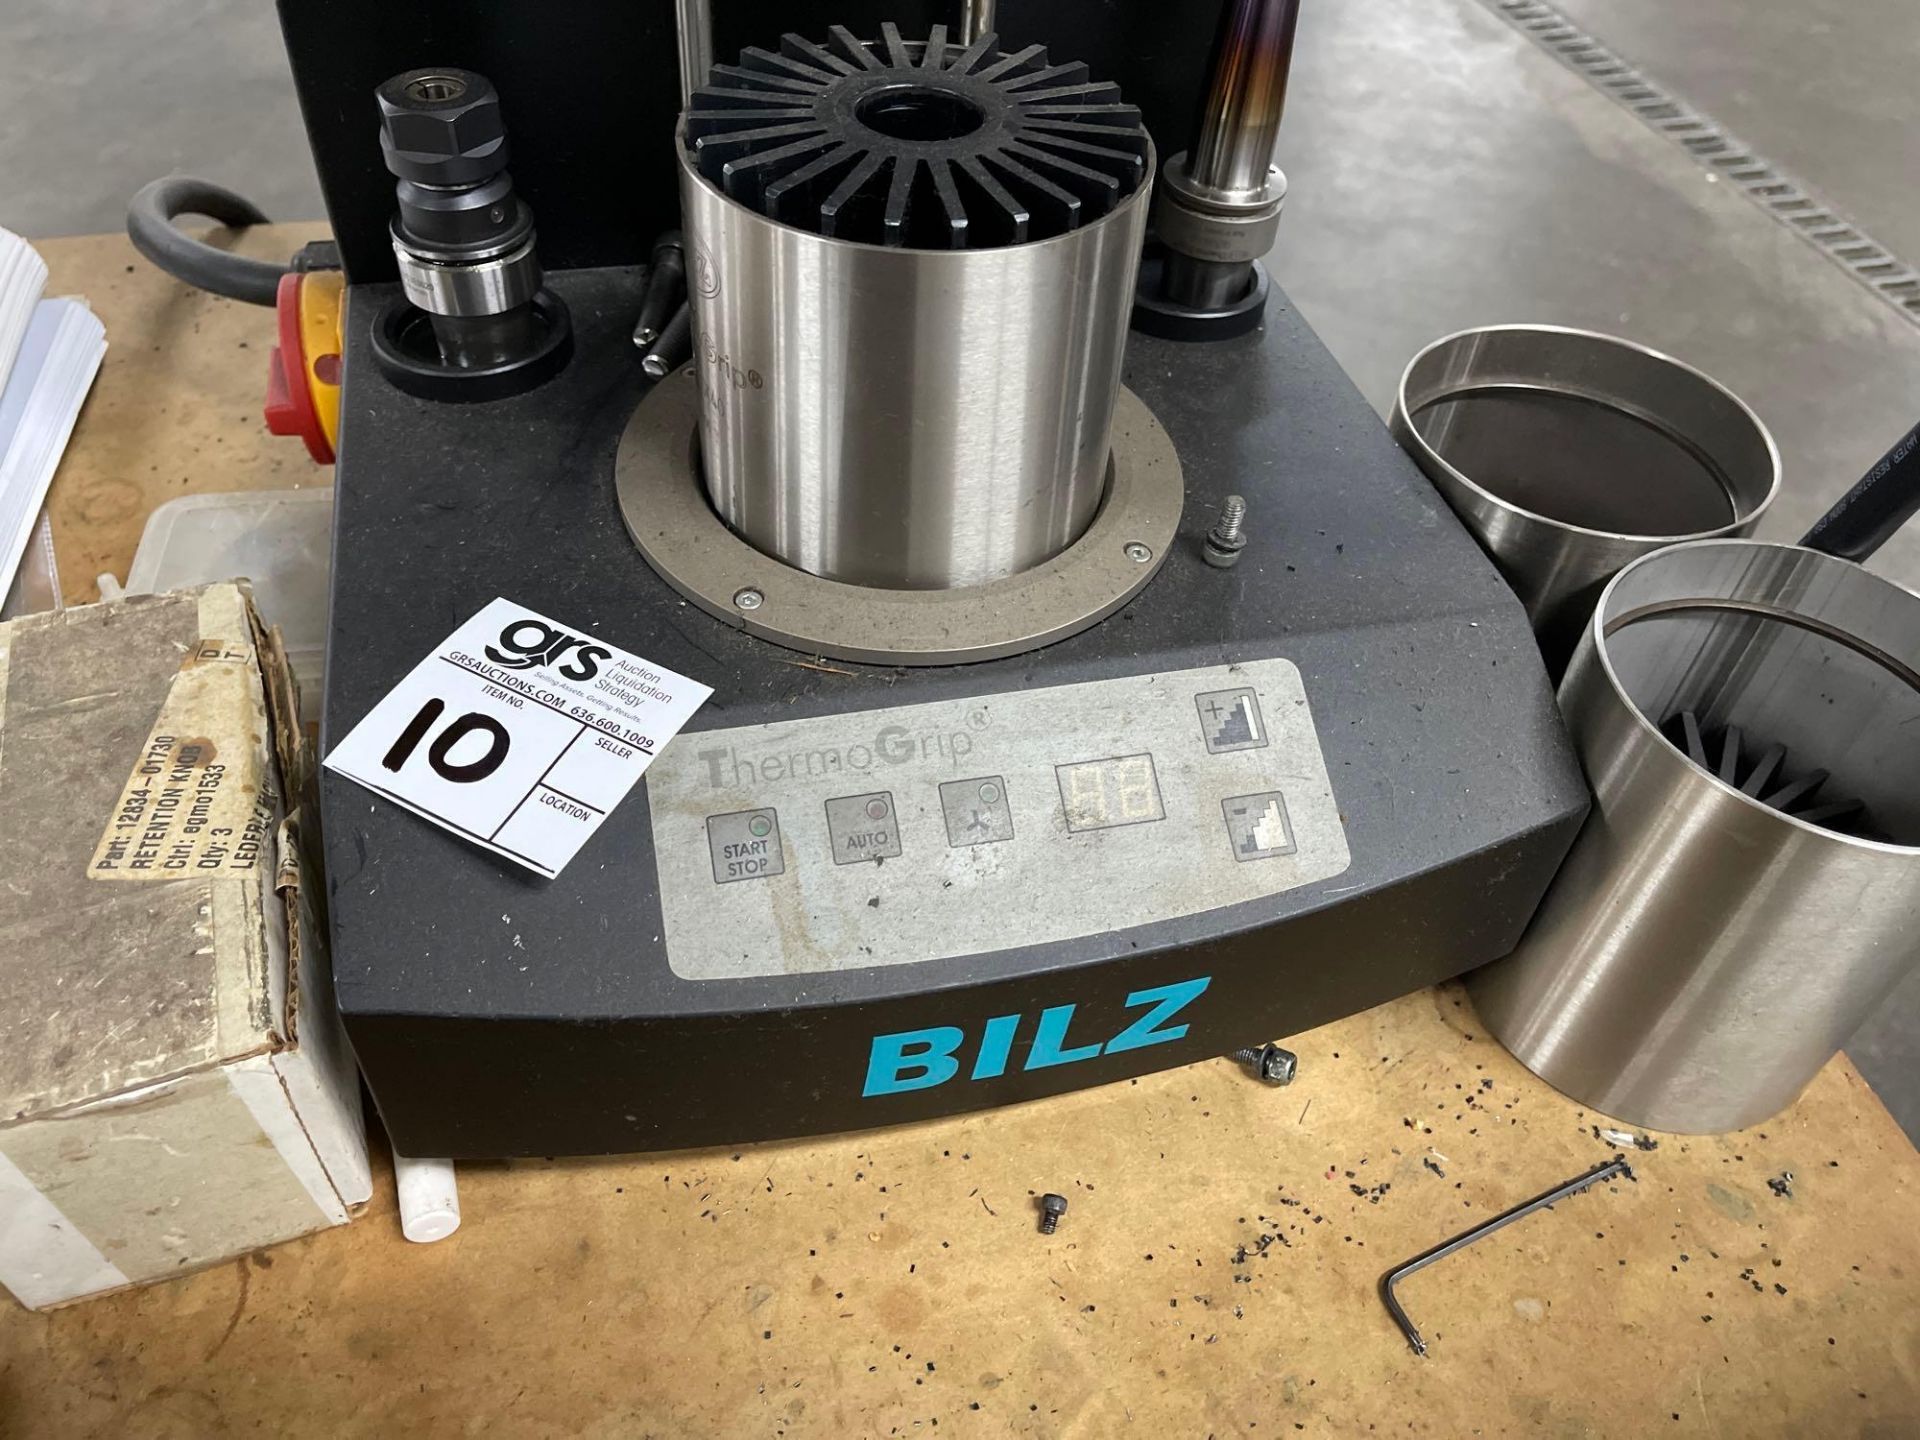 Bilz Thermo Grip Heat Shrink Machine - Image 2 of 7